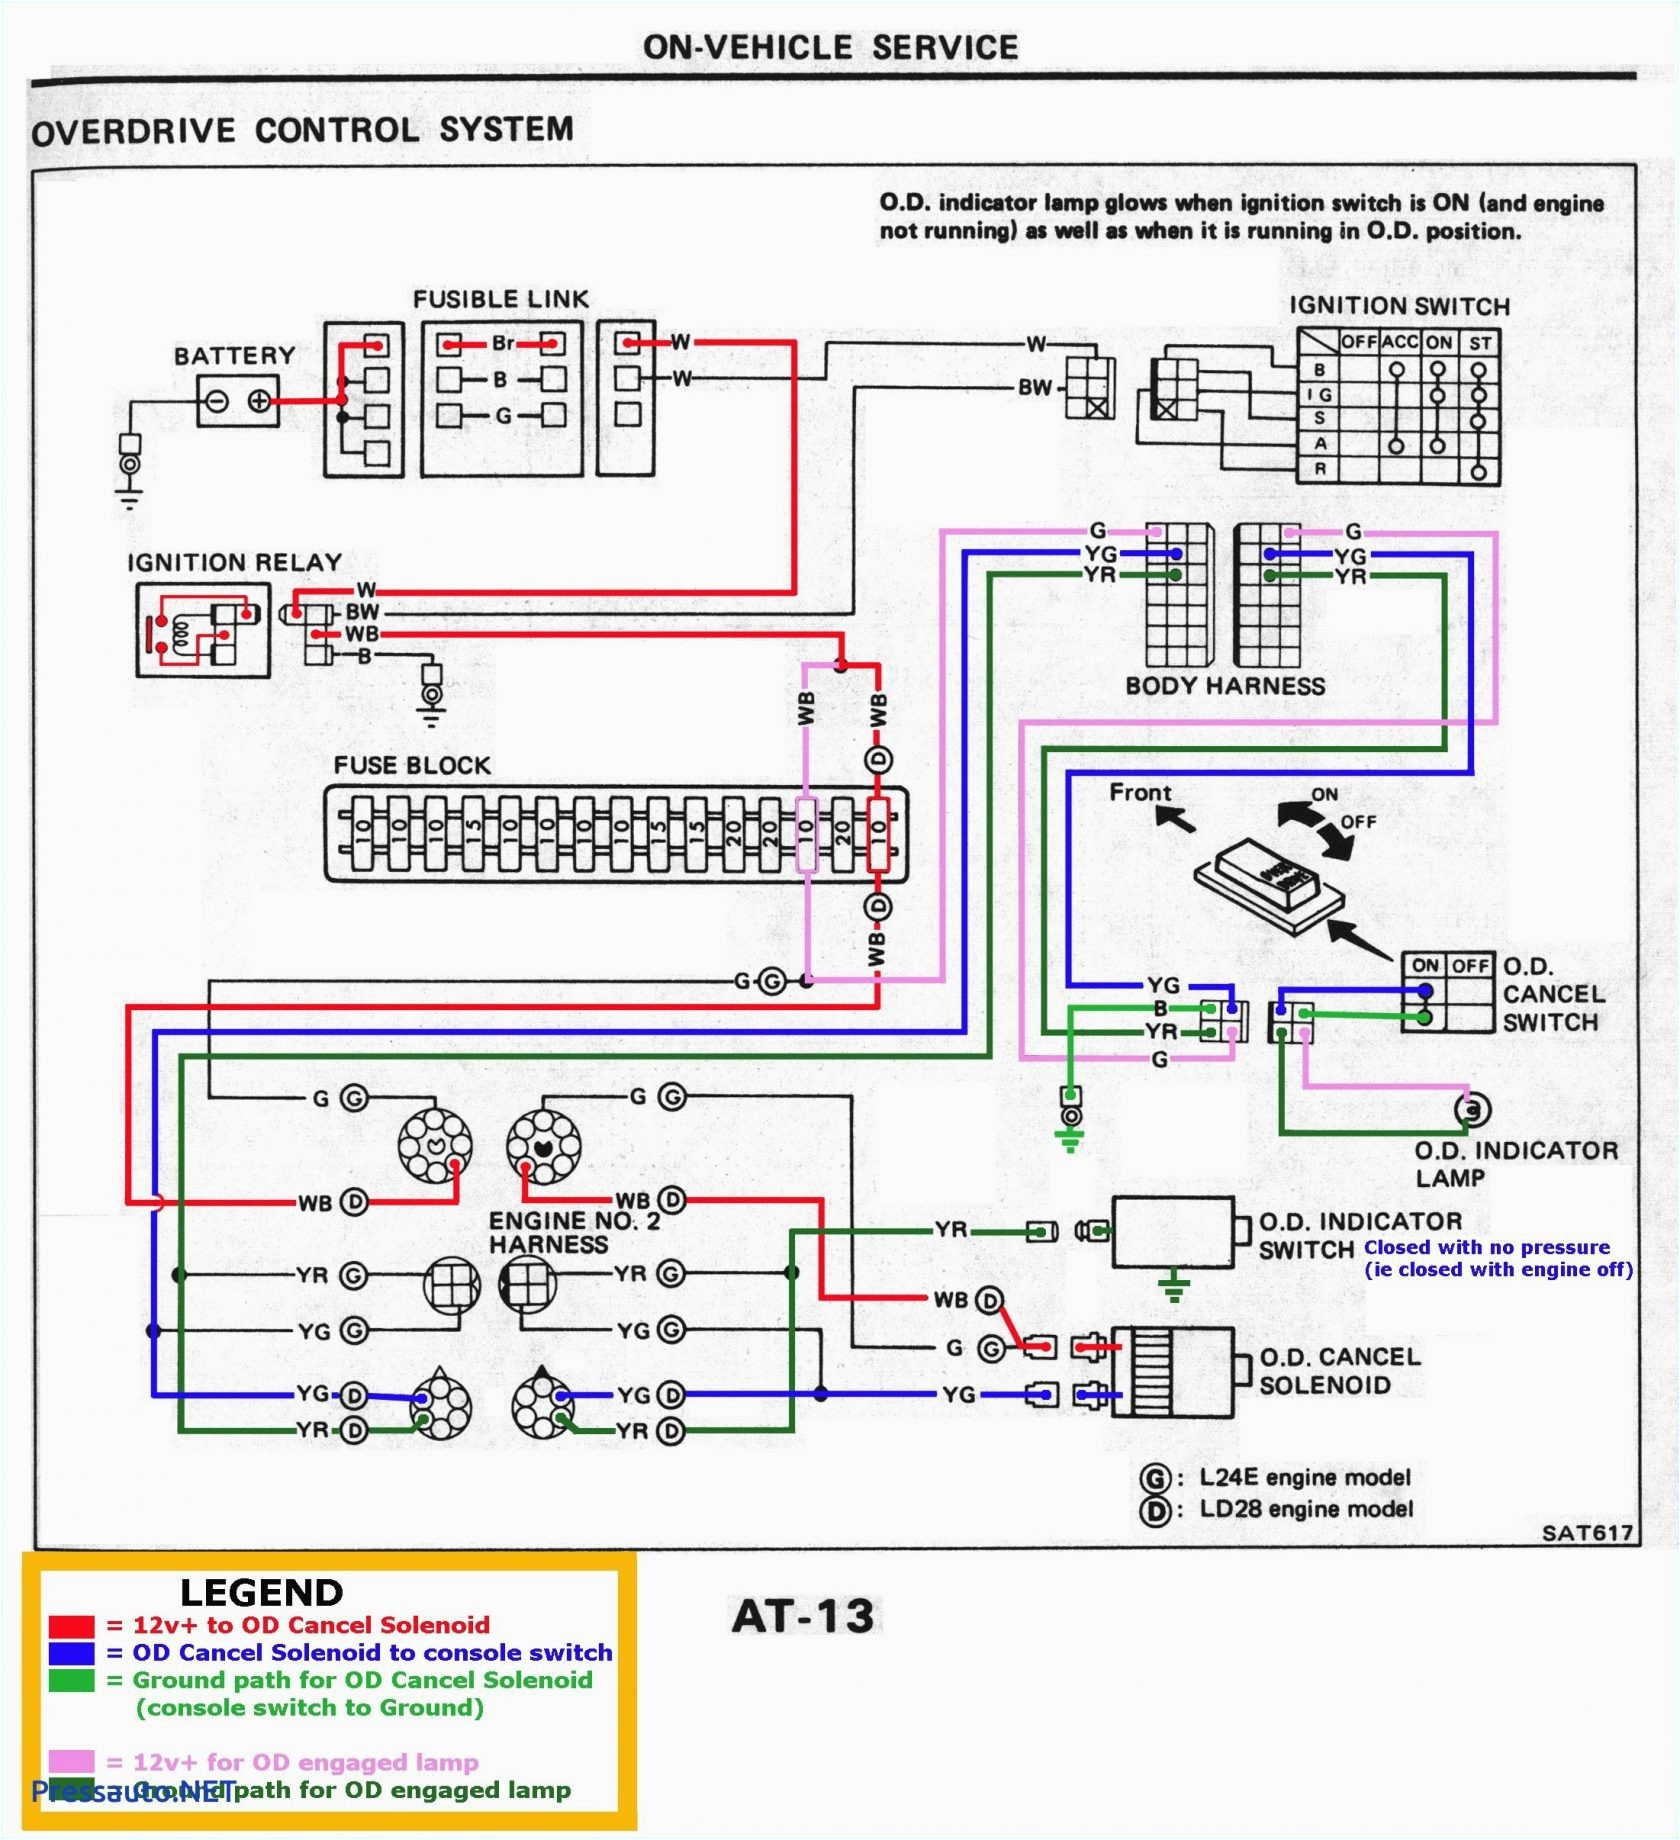 2007 chevy aveo fuse diagram wiring diagram wiring diagram for 2001 chevy silverado on 2007 chevy